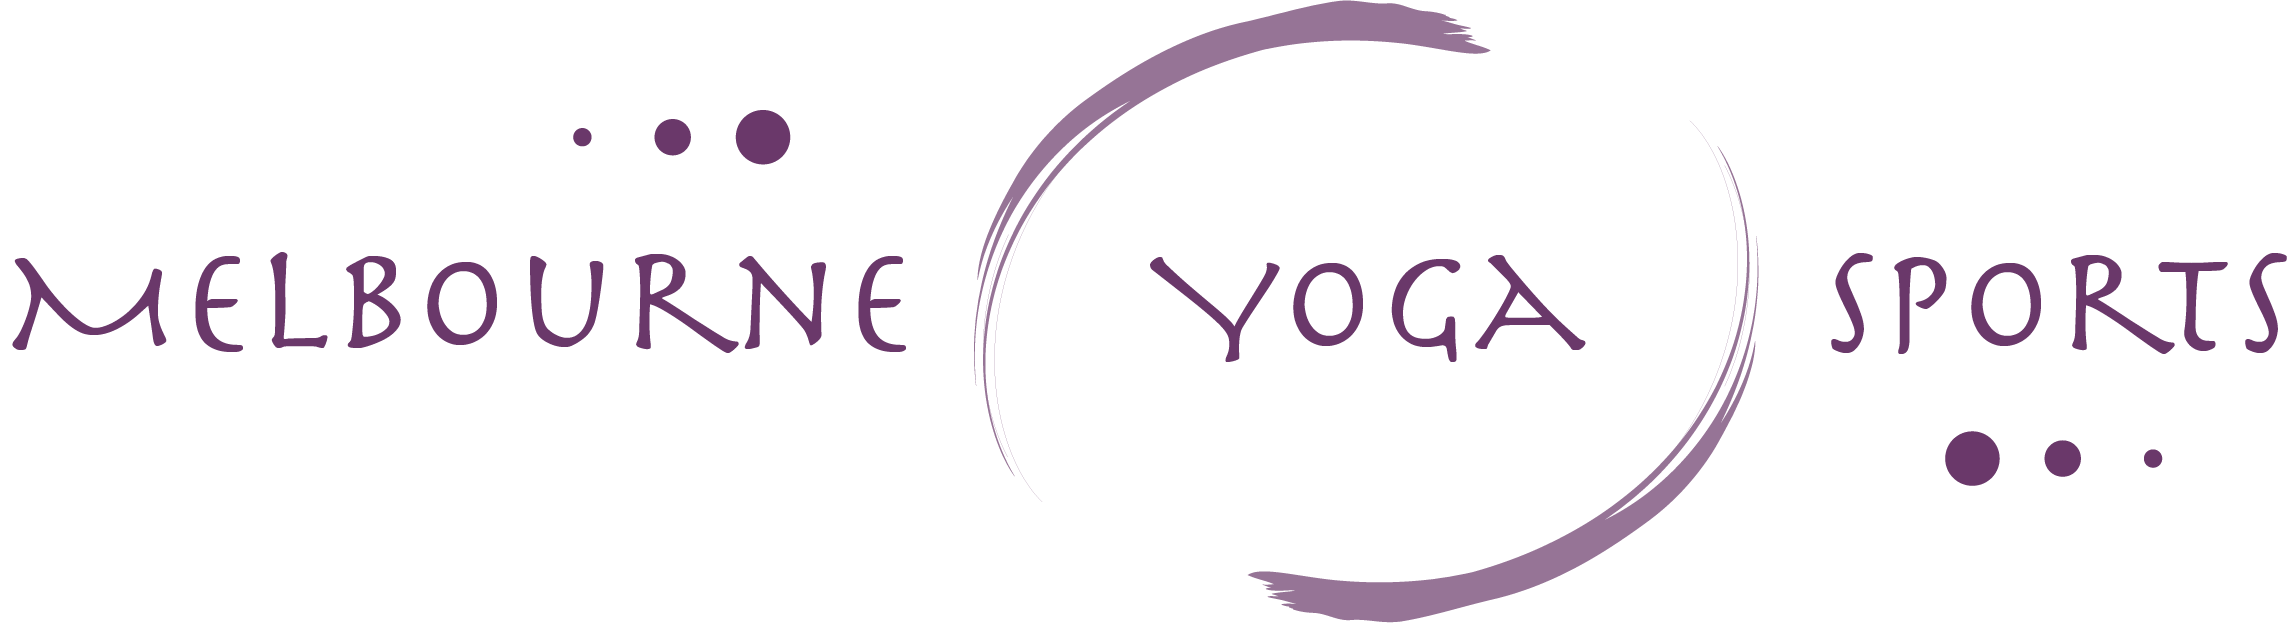 Melbourne Yoga Sports Logo and Home Button